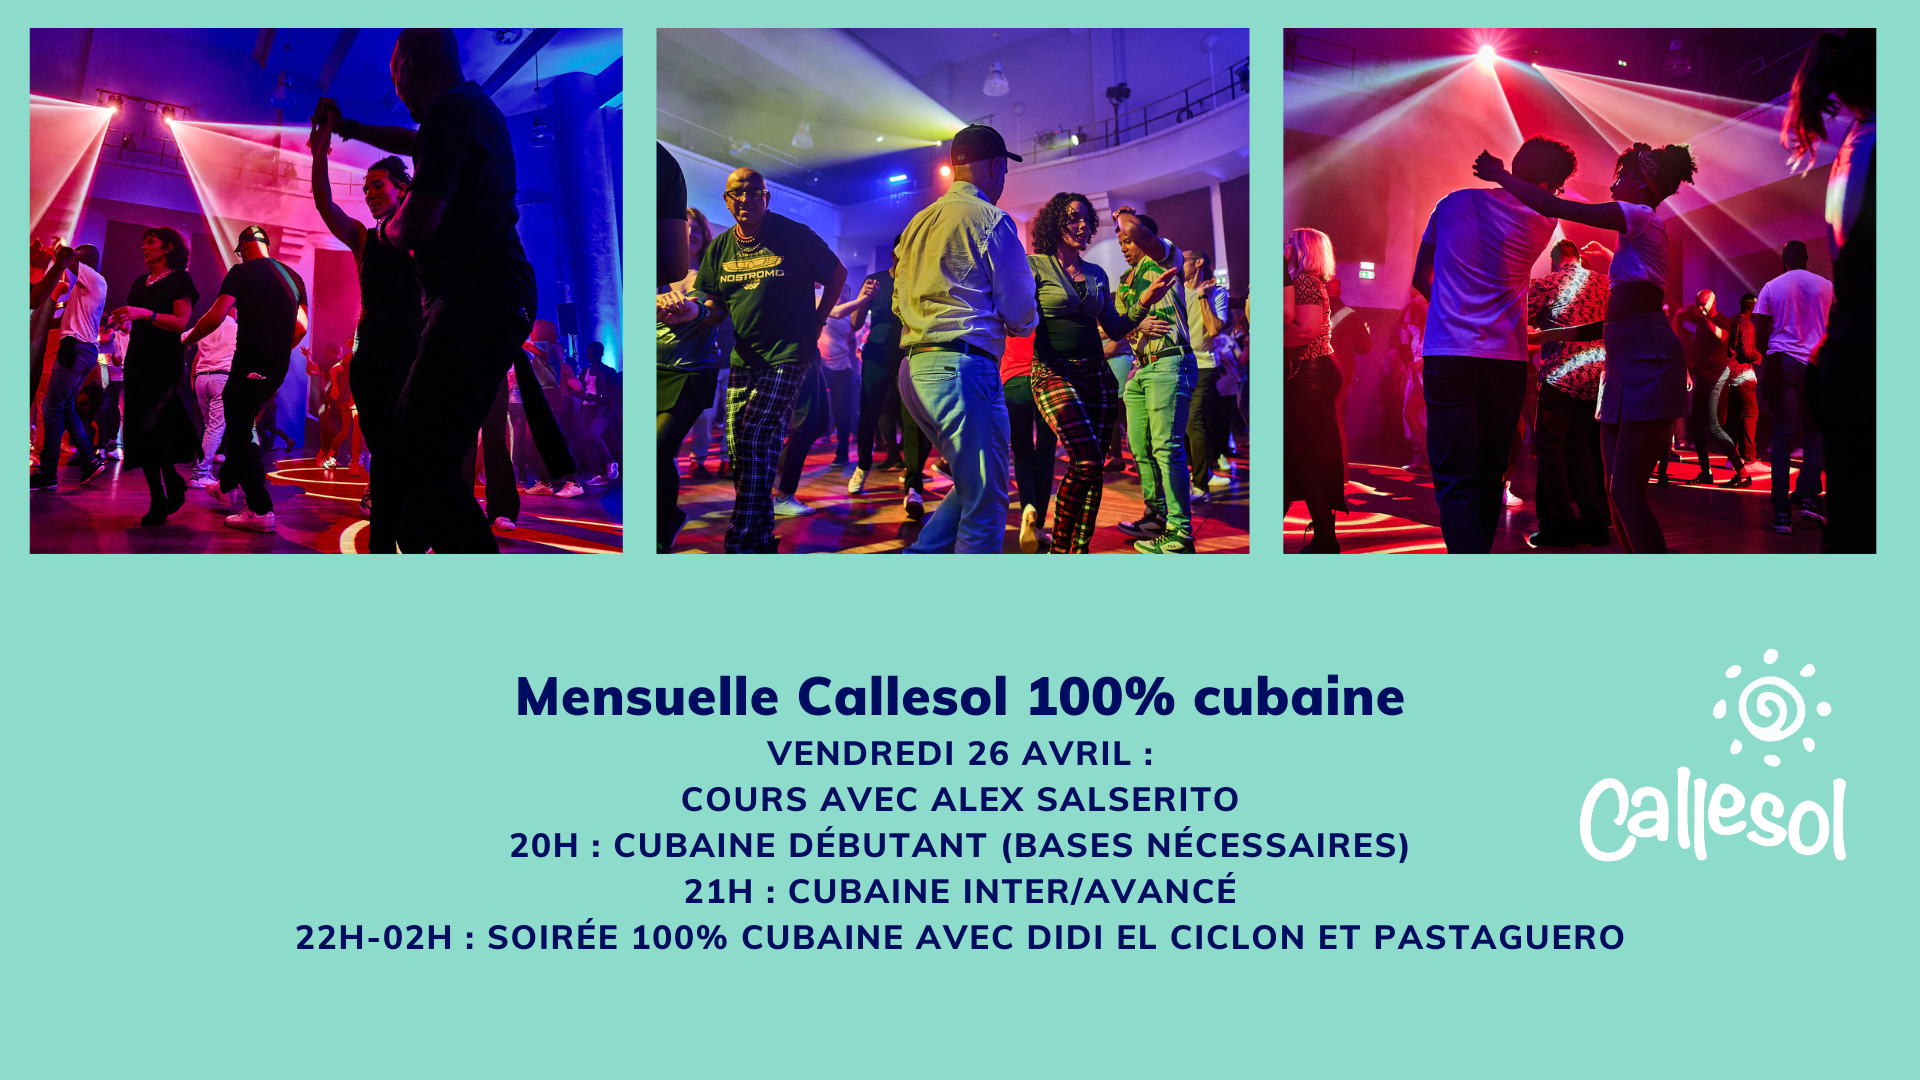 Mensuelle Callesol 100% cubaine le 26 avril